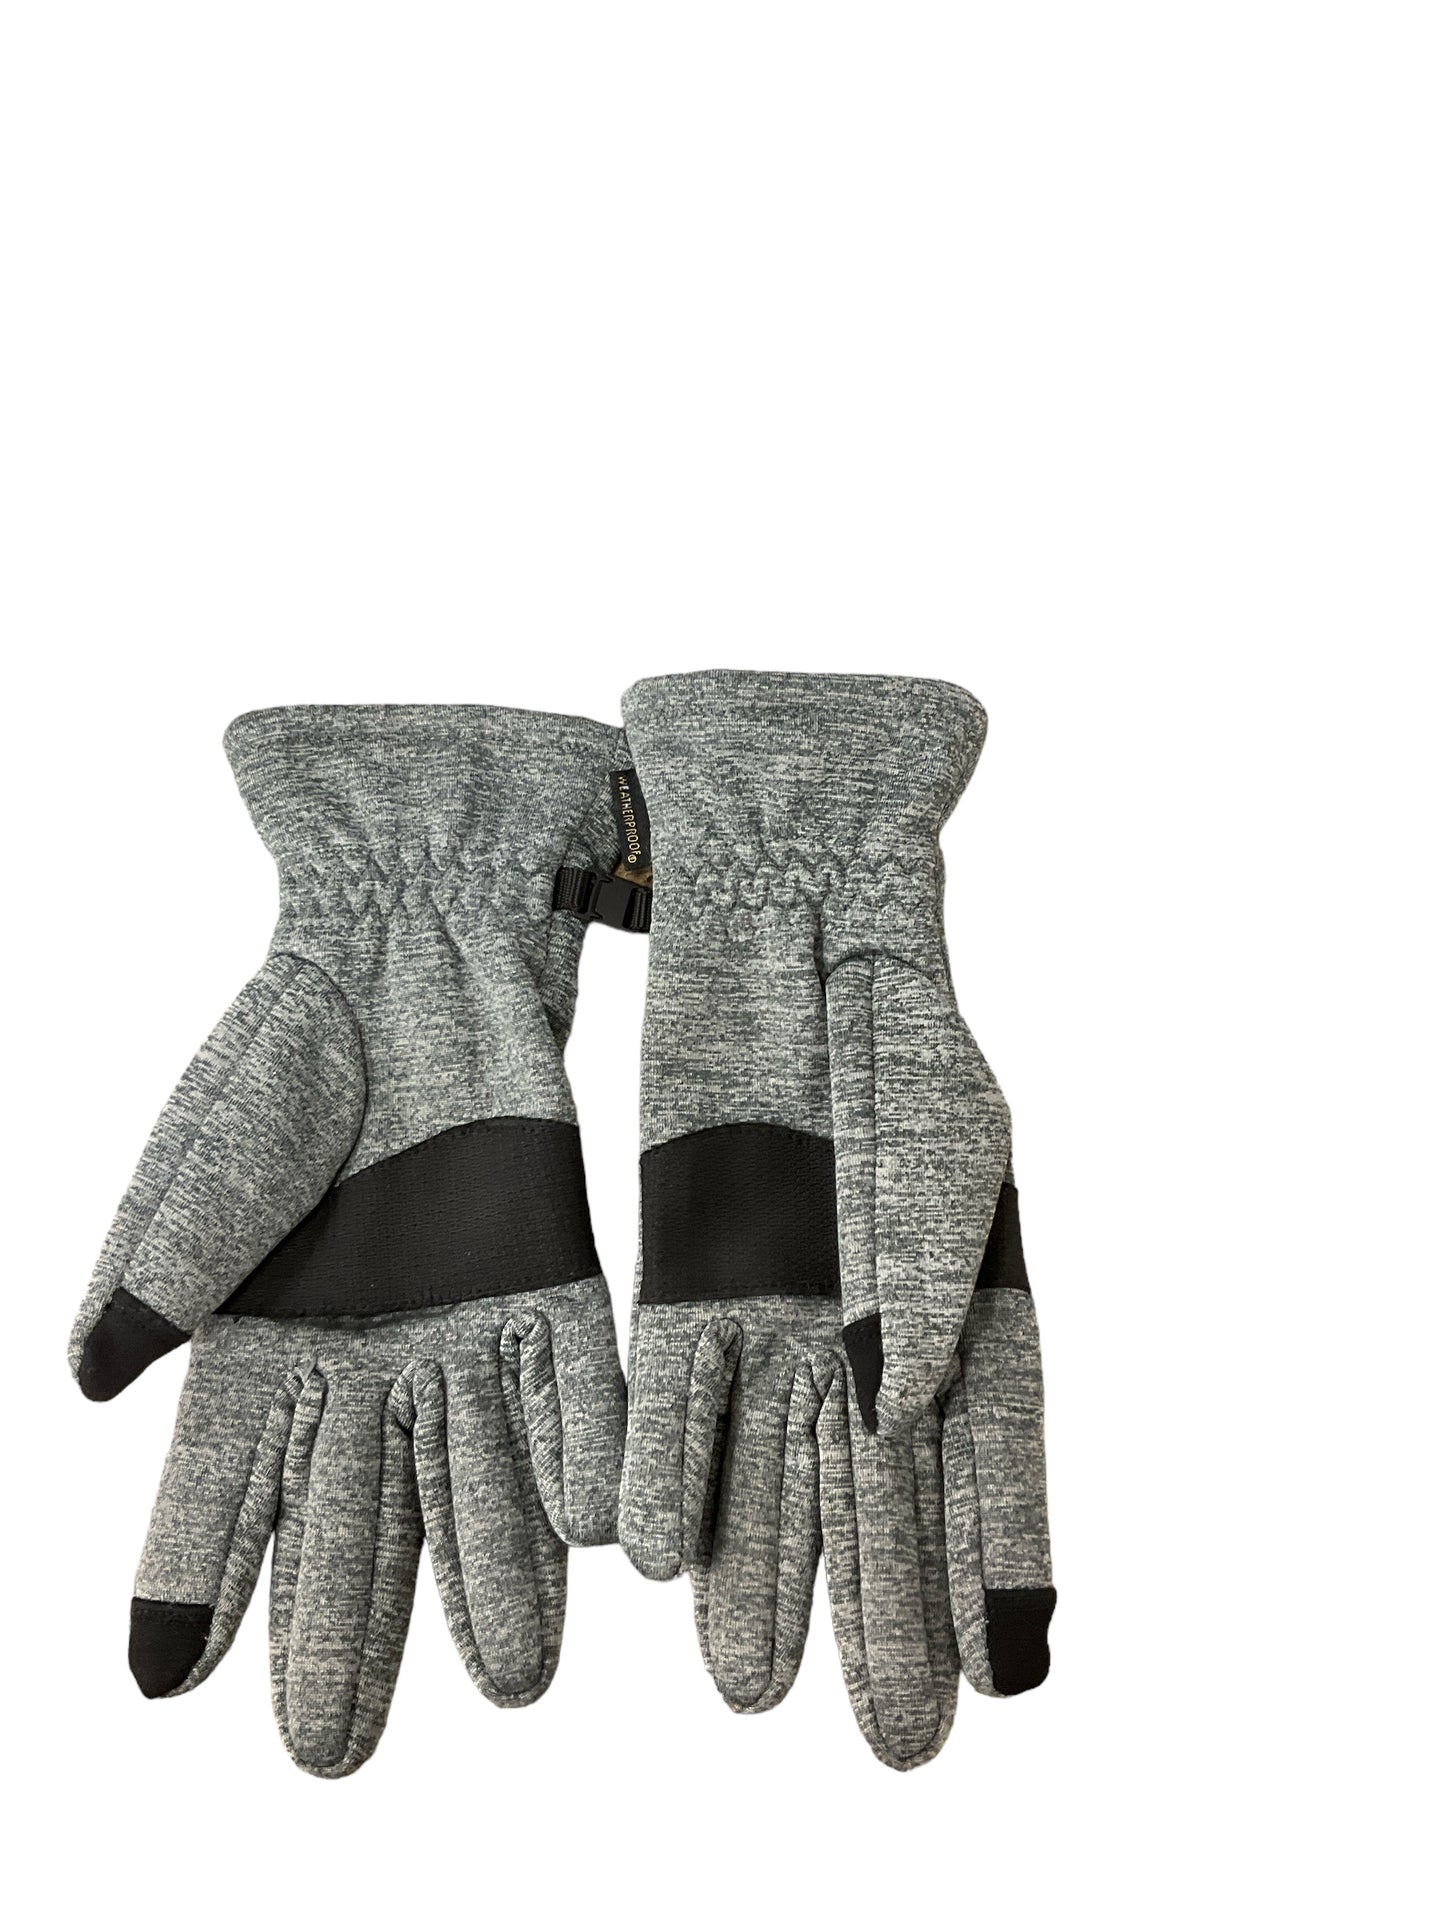 Gloves By Weatherproof